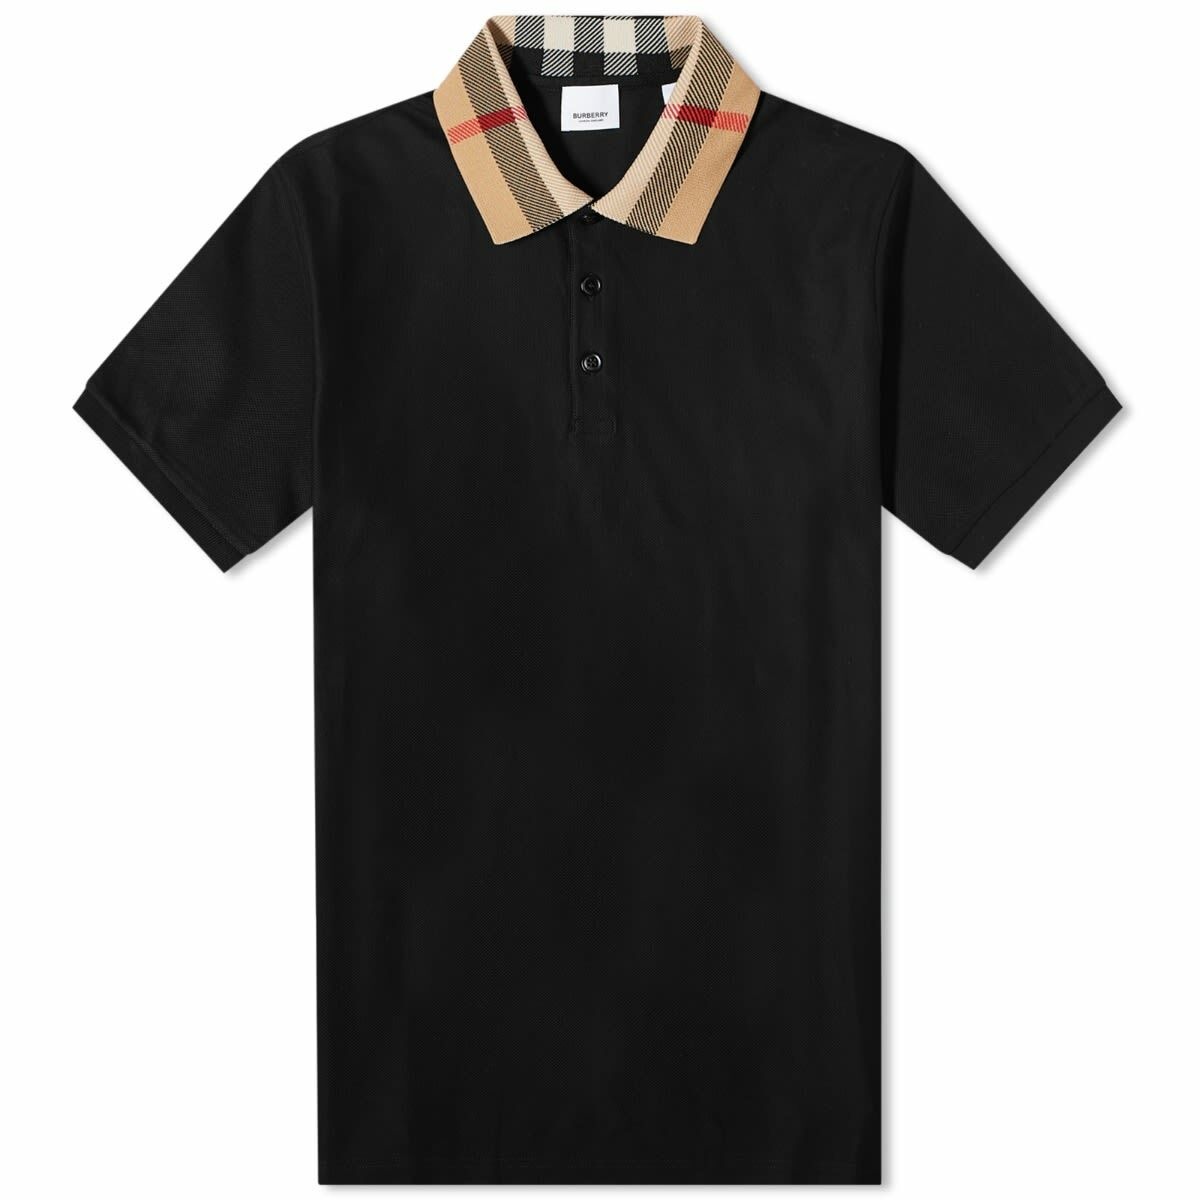 Burberry Men's Cody Check Collar Polo Shirt in Black Burberry